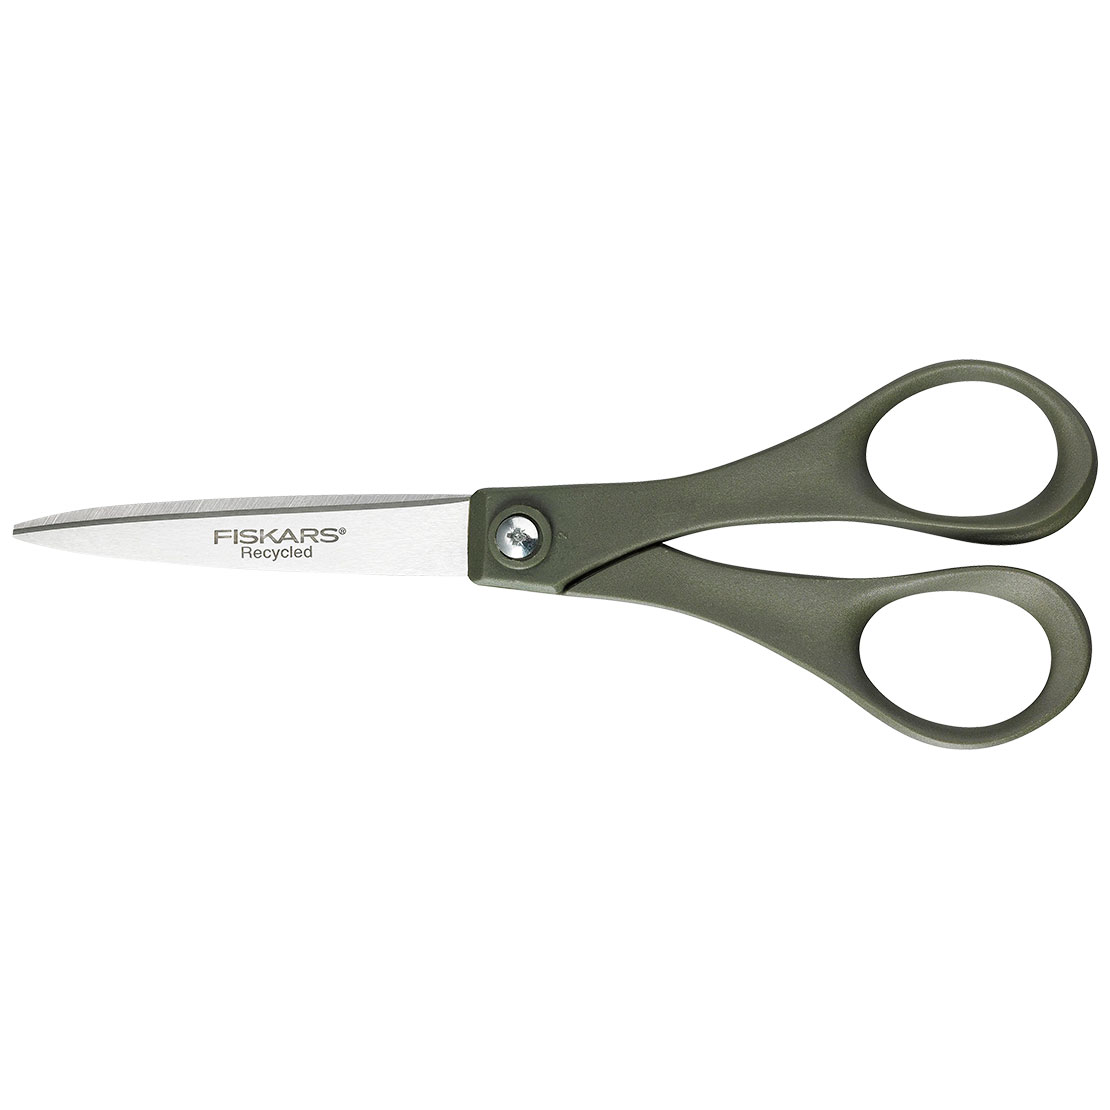 Recycled Fiskars scissors 18 cm